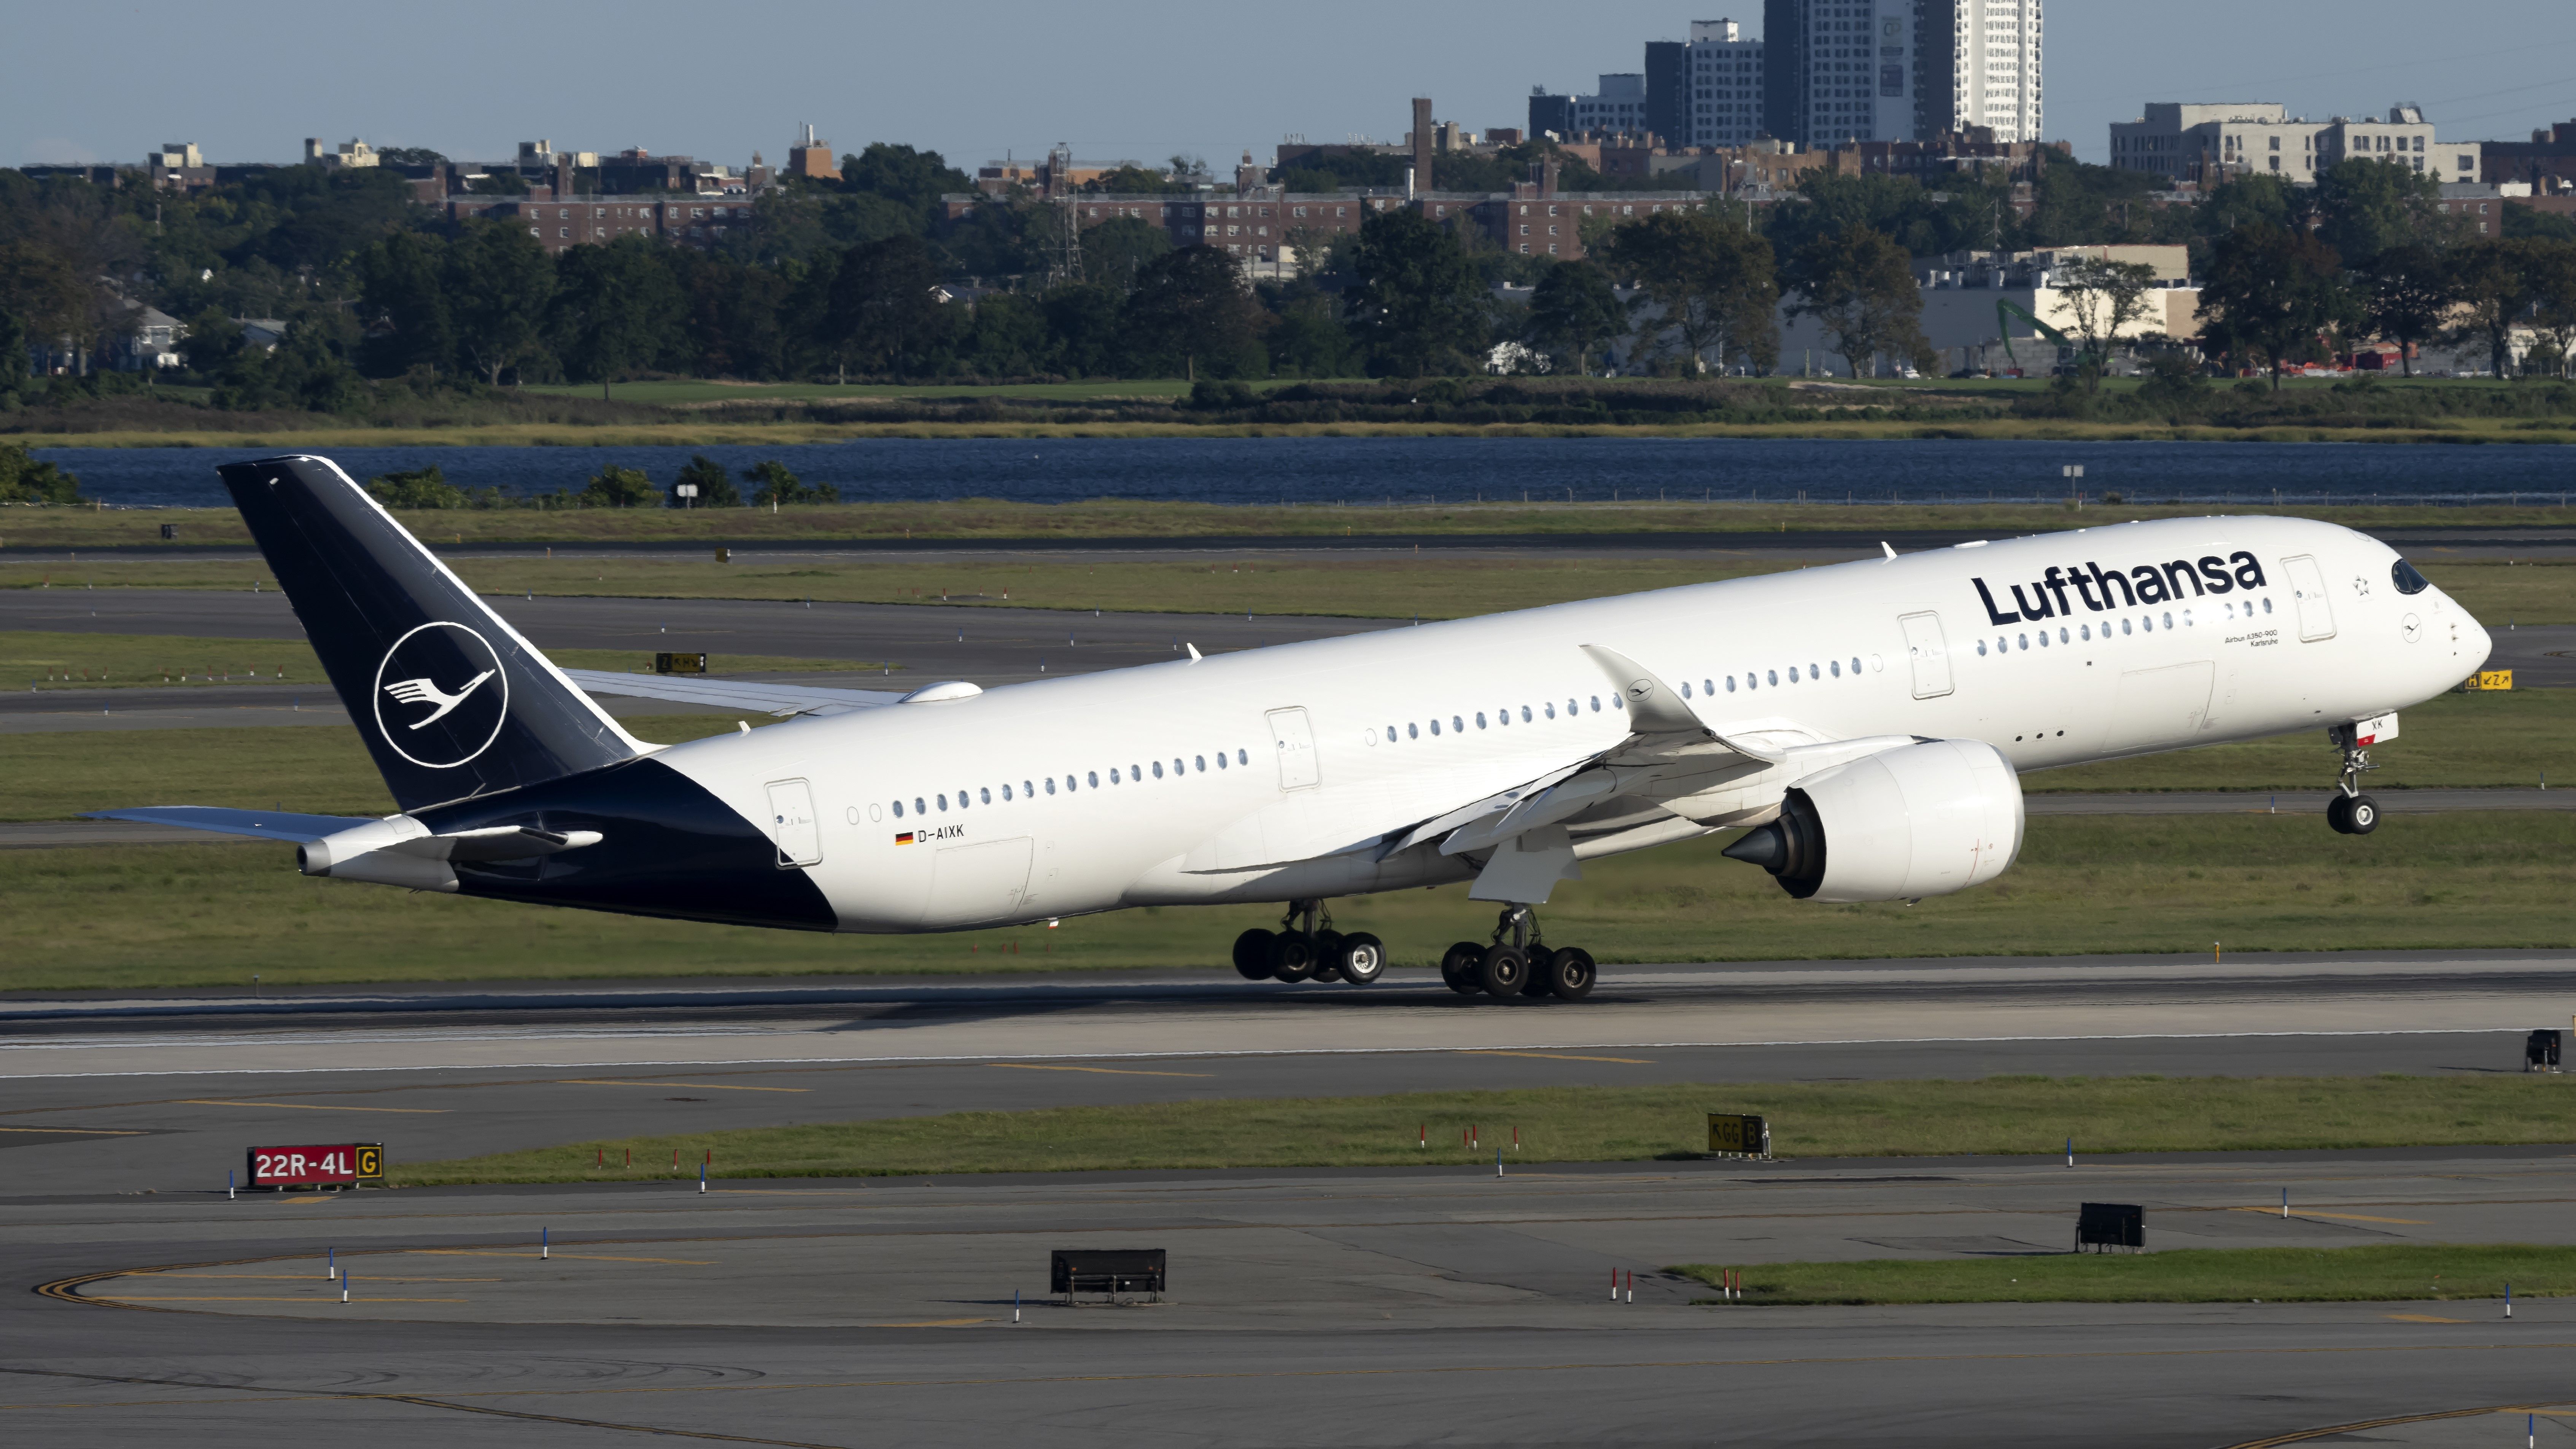 Lufthansa Airbus A350 taking off